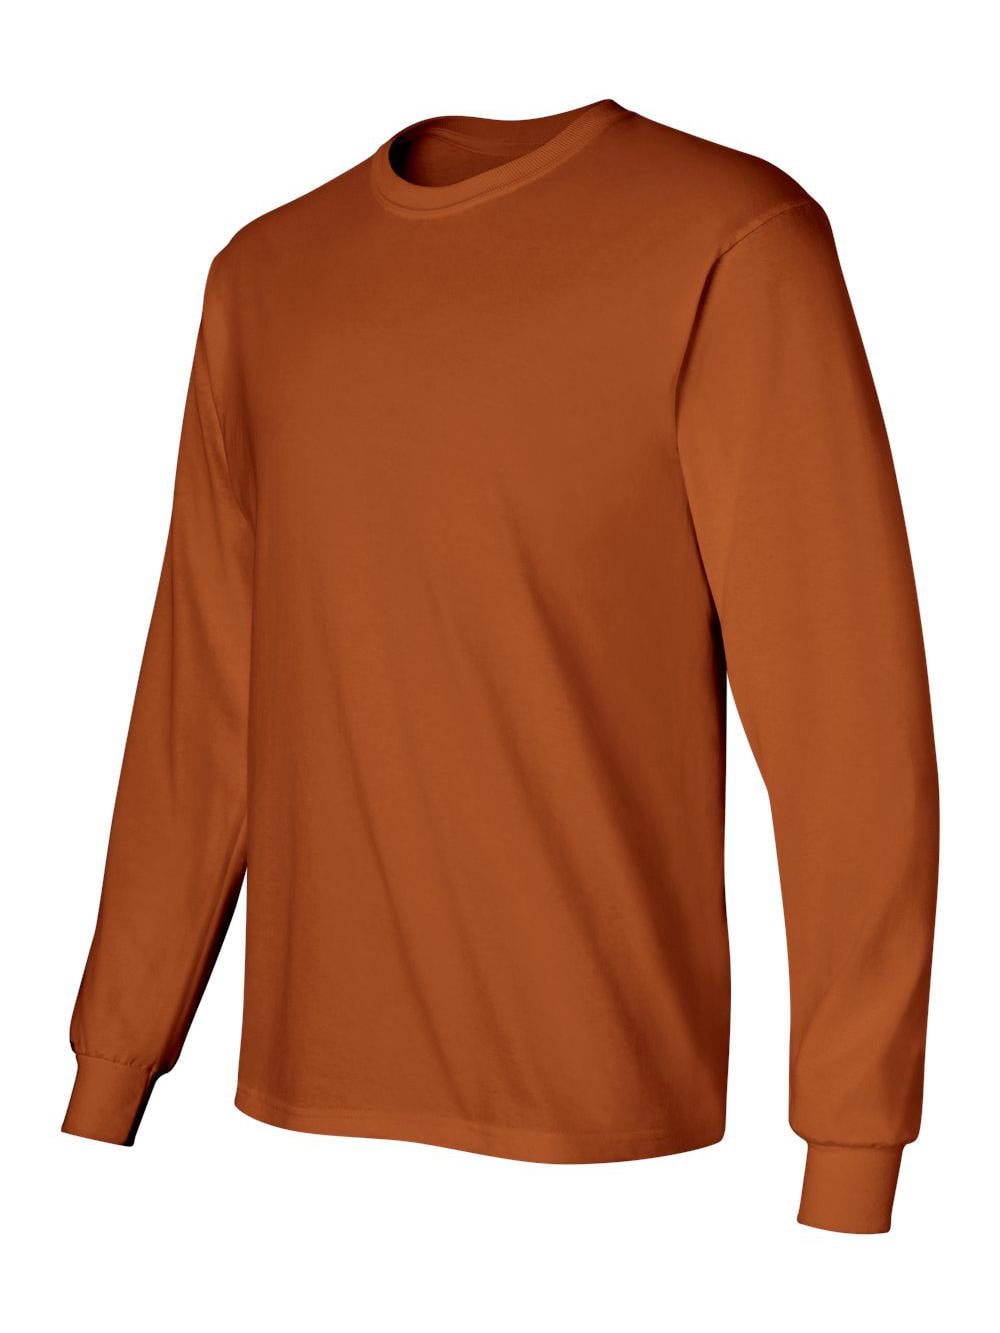 4XL Gildan Mens Ultra Cotton 100% Cotton T-Shirt Texas Orange 